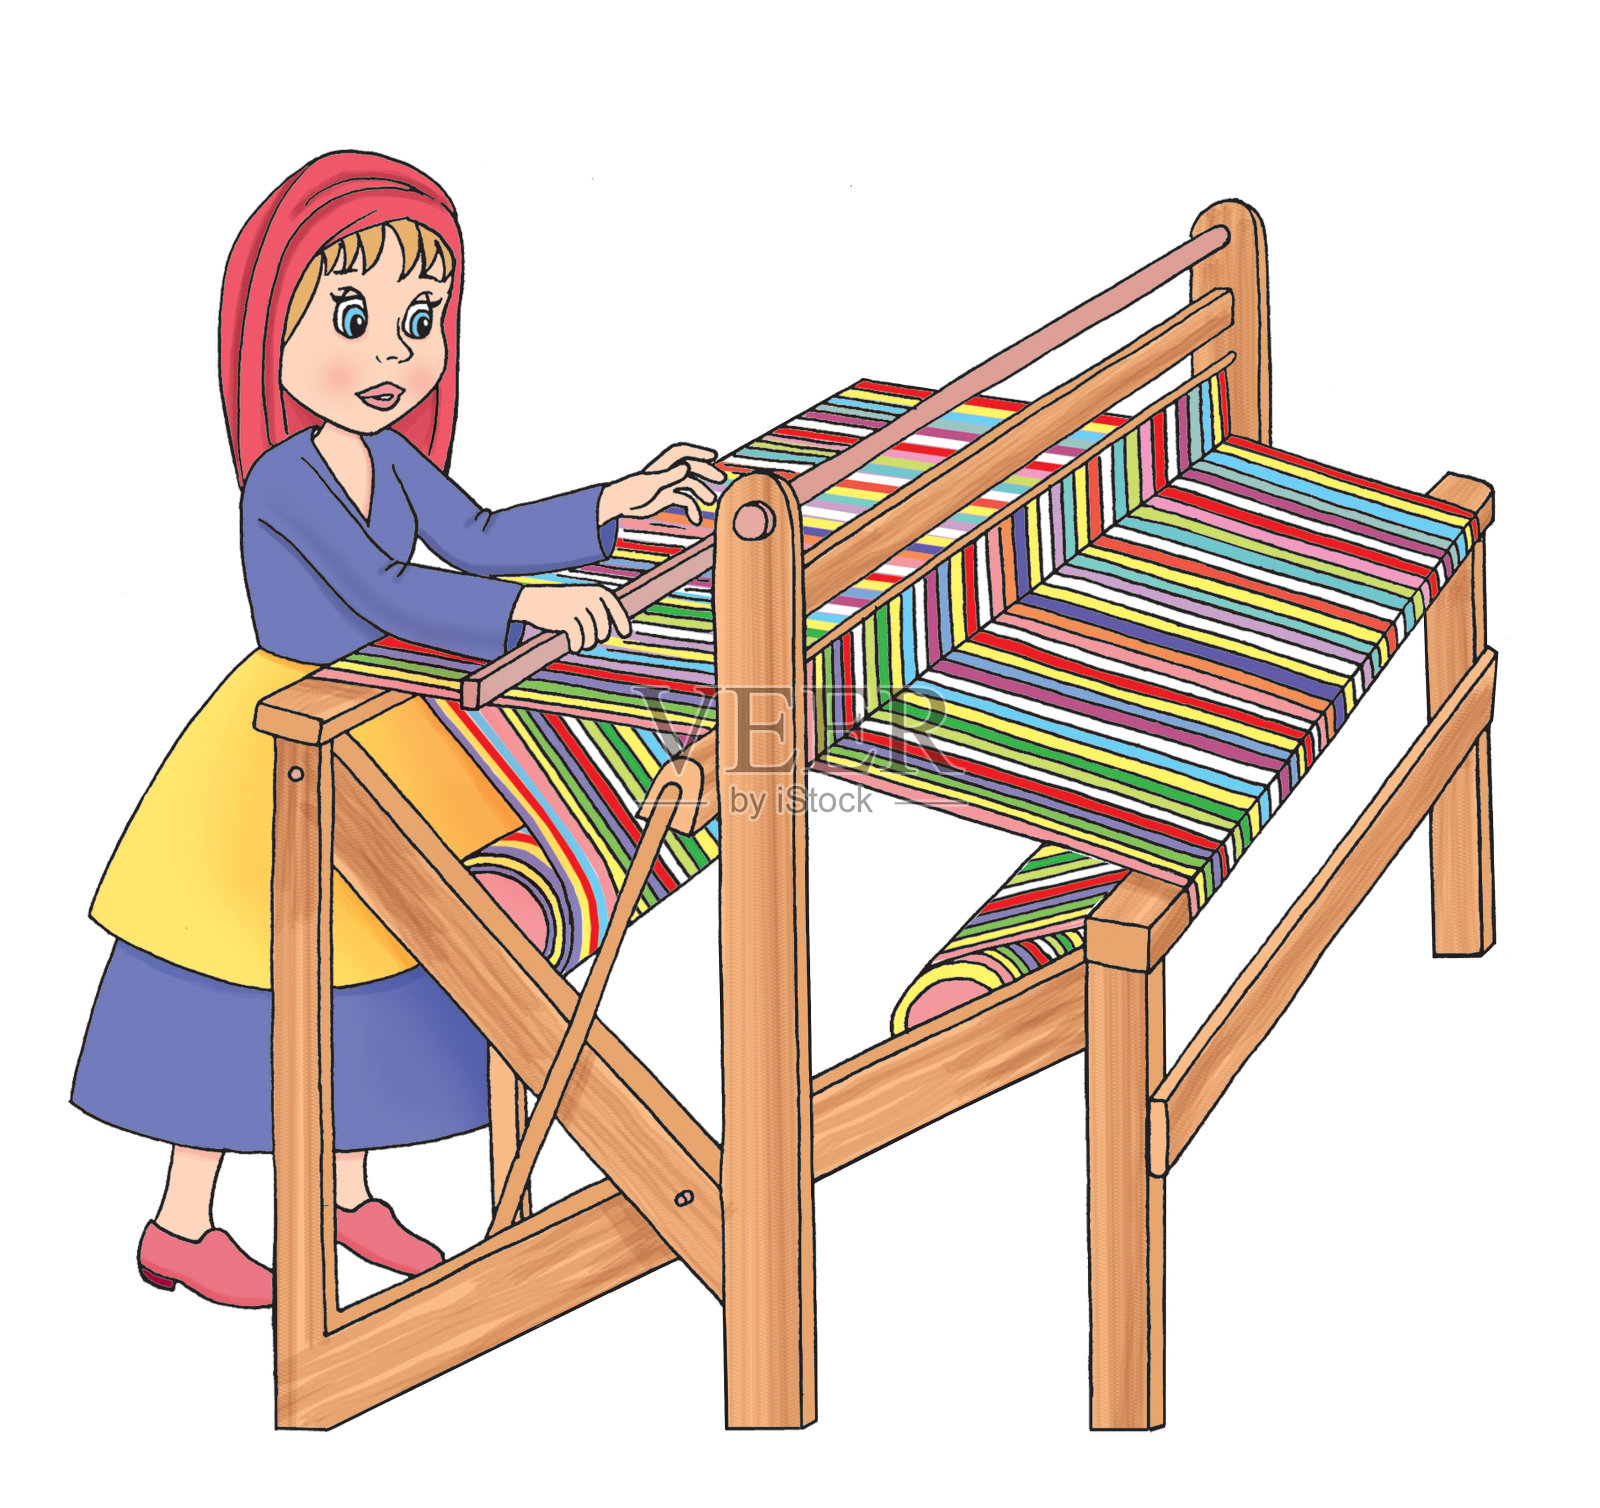 Old wooden loom in weaving a carpet - jpg illustration插画图片素材